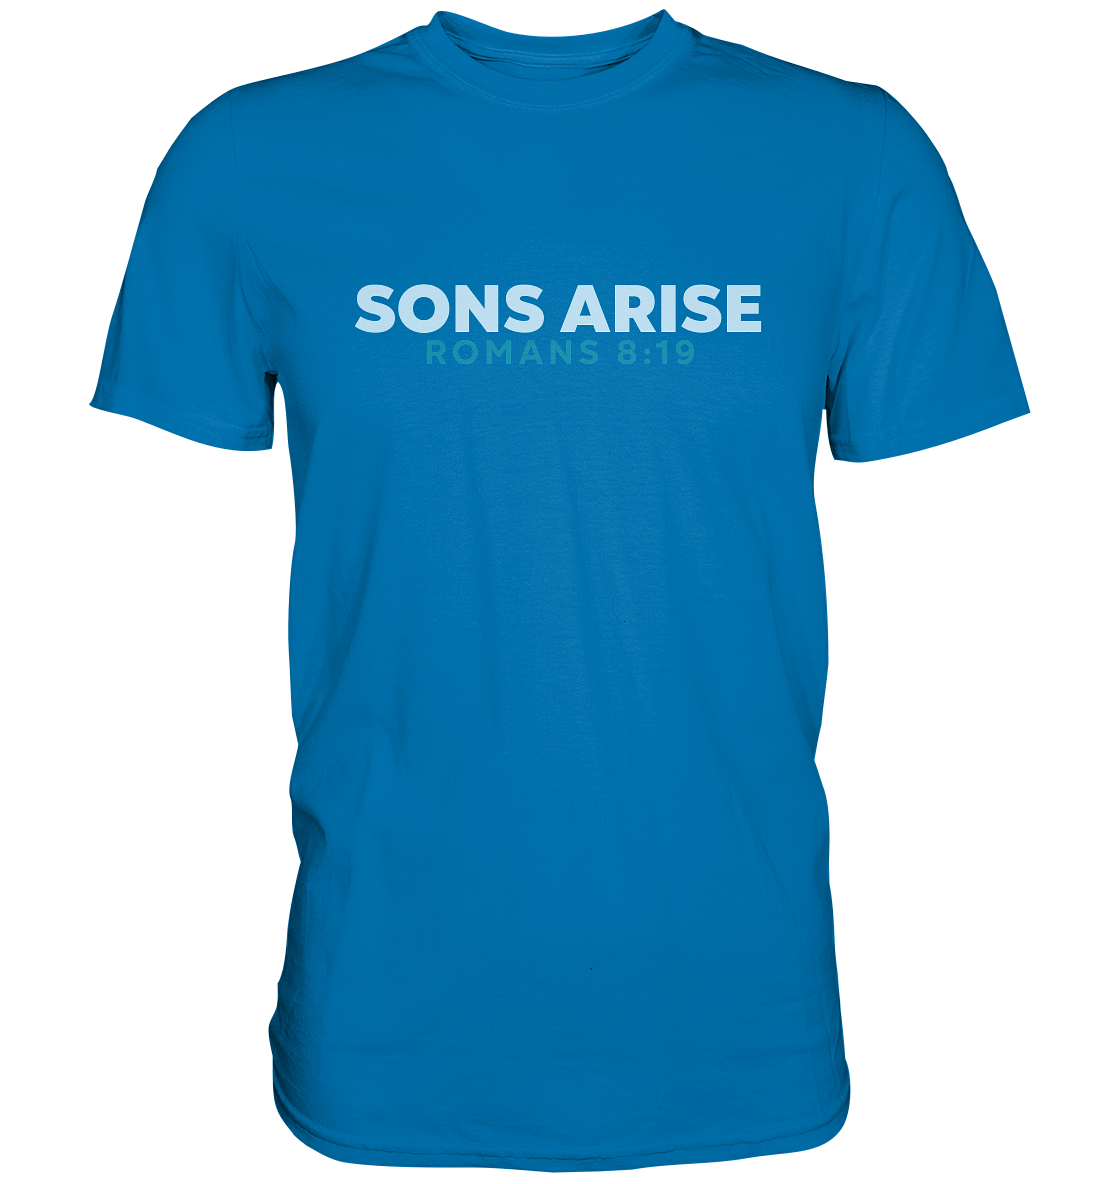 Sons Arise - Söhne Gottes - Premium Shirt